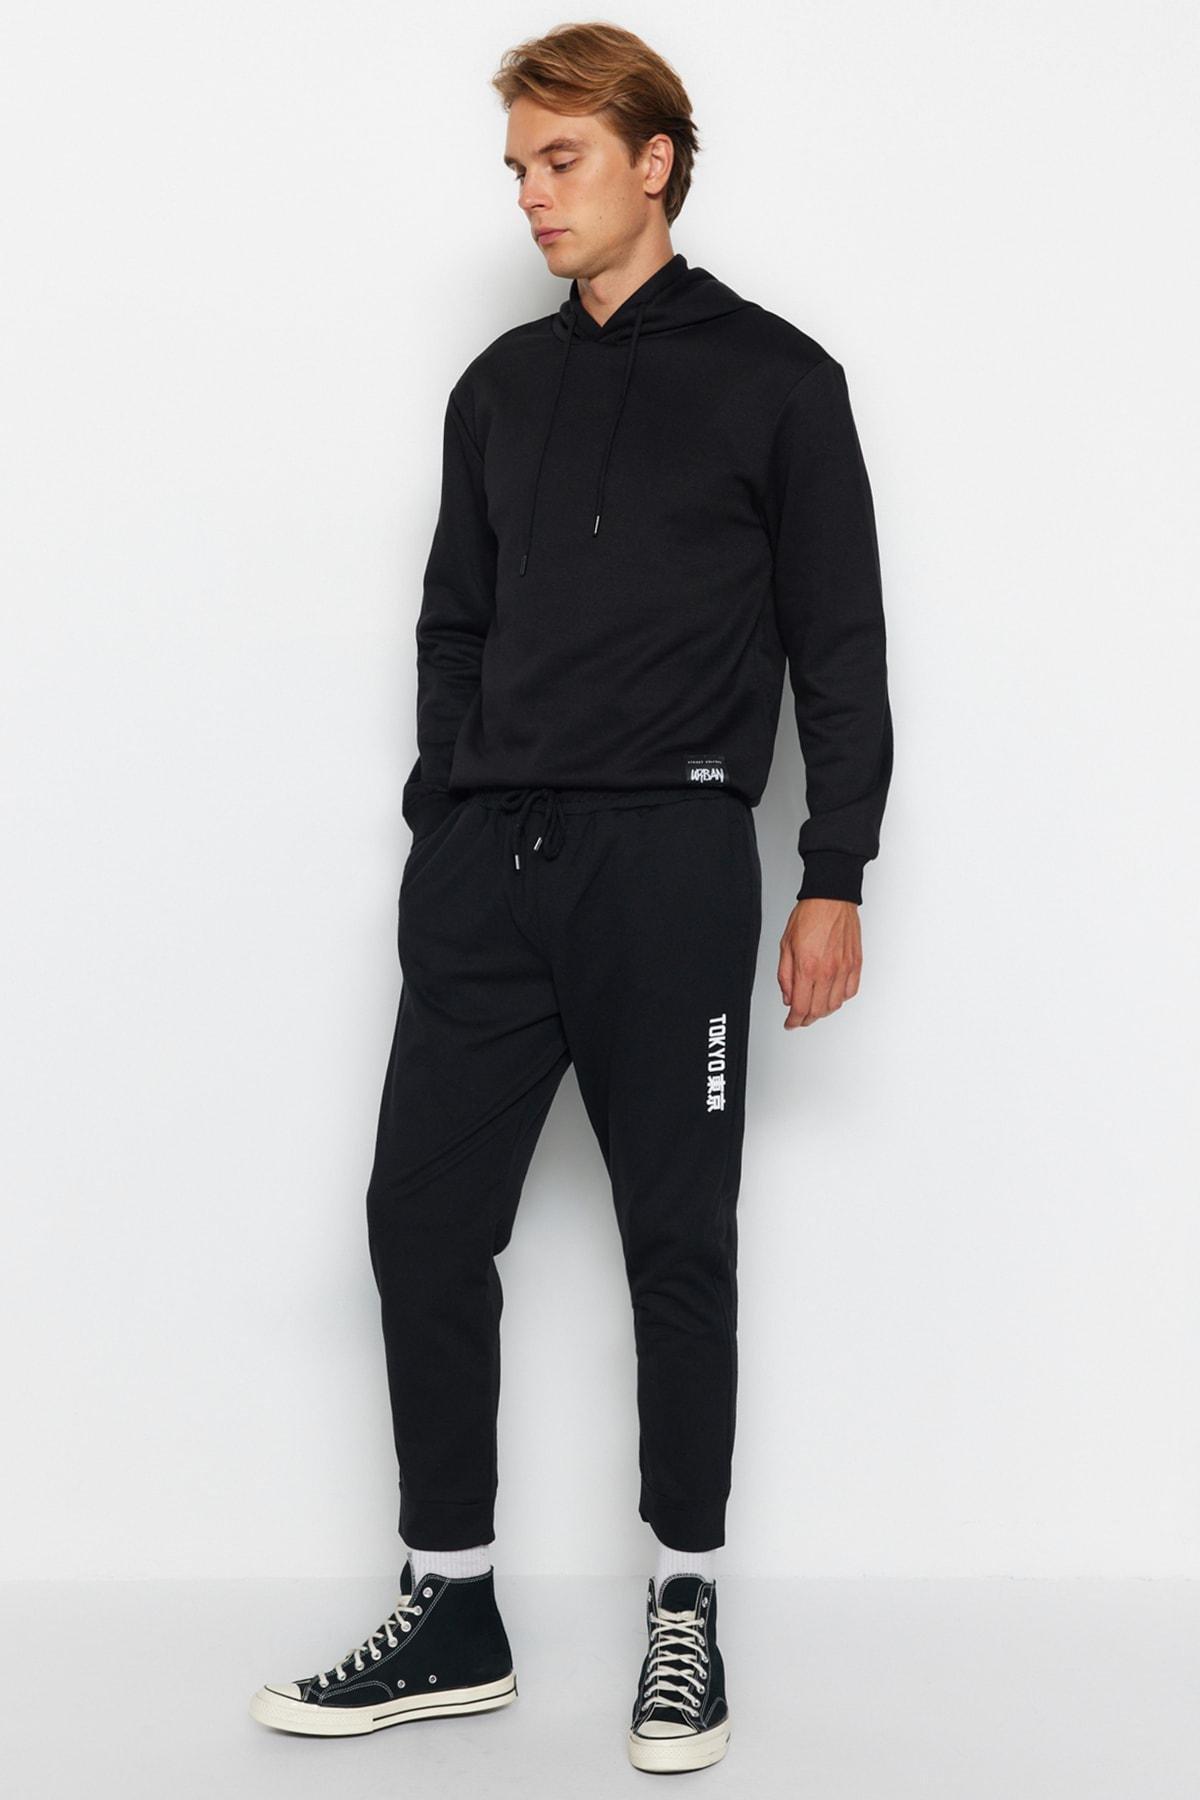 Trendyol - Black Relaxed Sweatpants